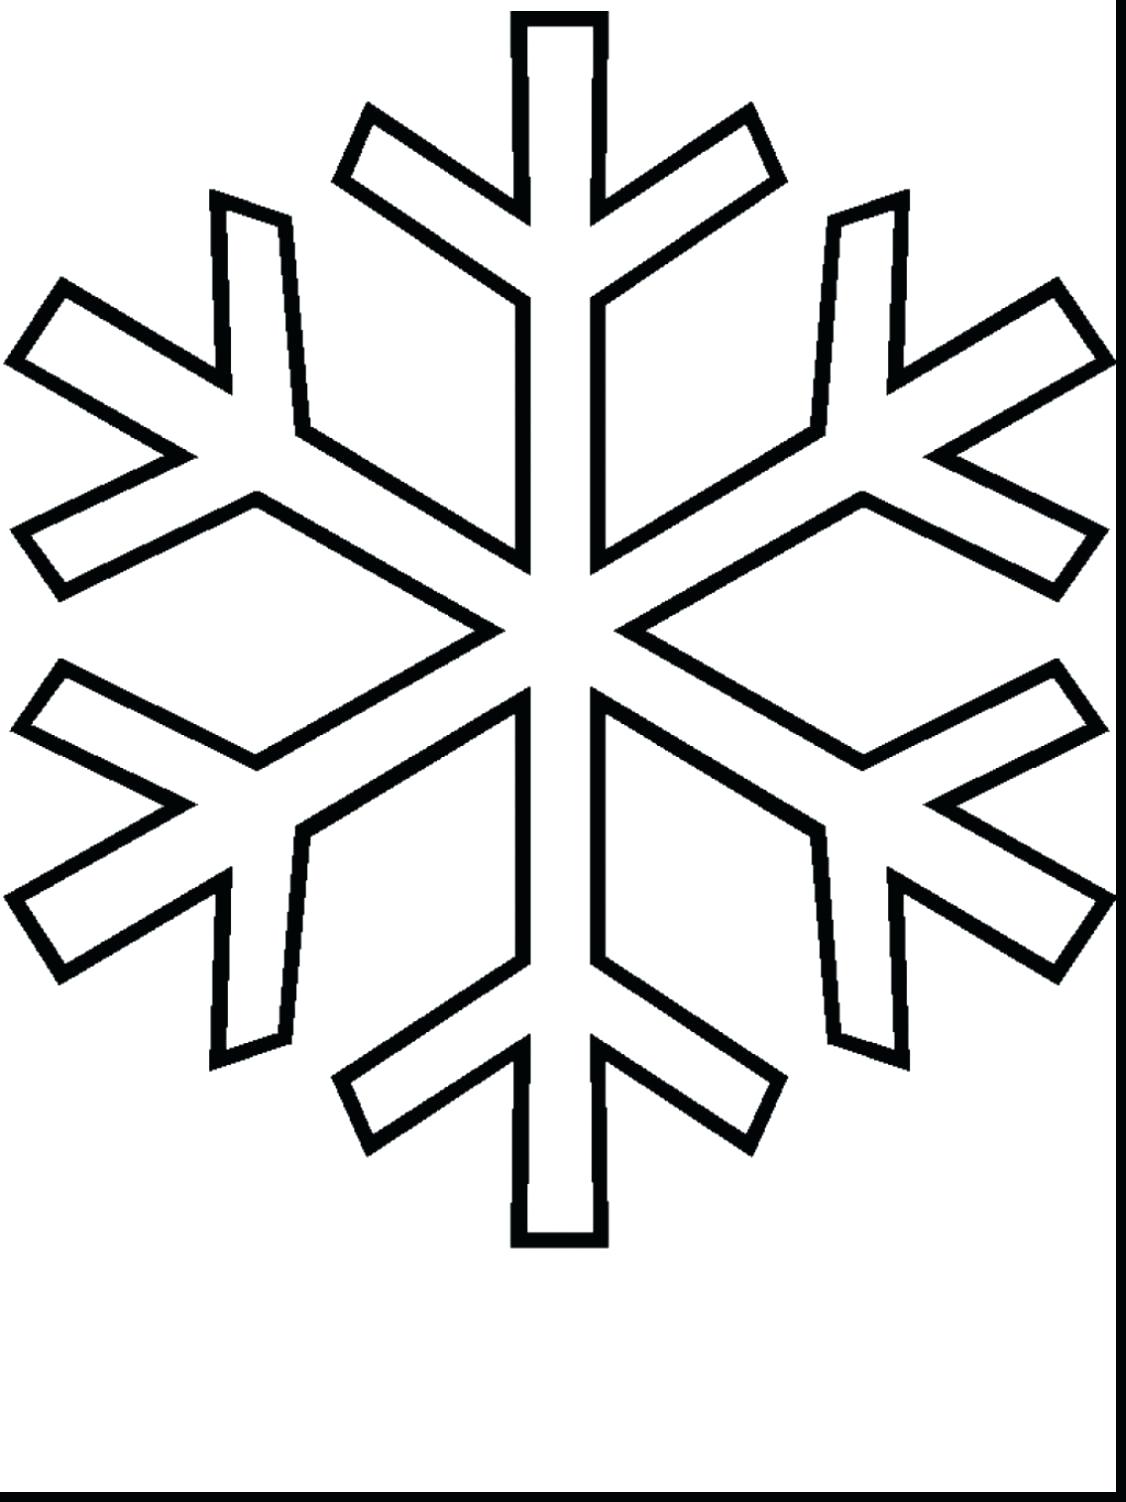 simple-snowflake-drawing-at-getdrawings-free-download